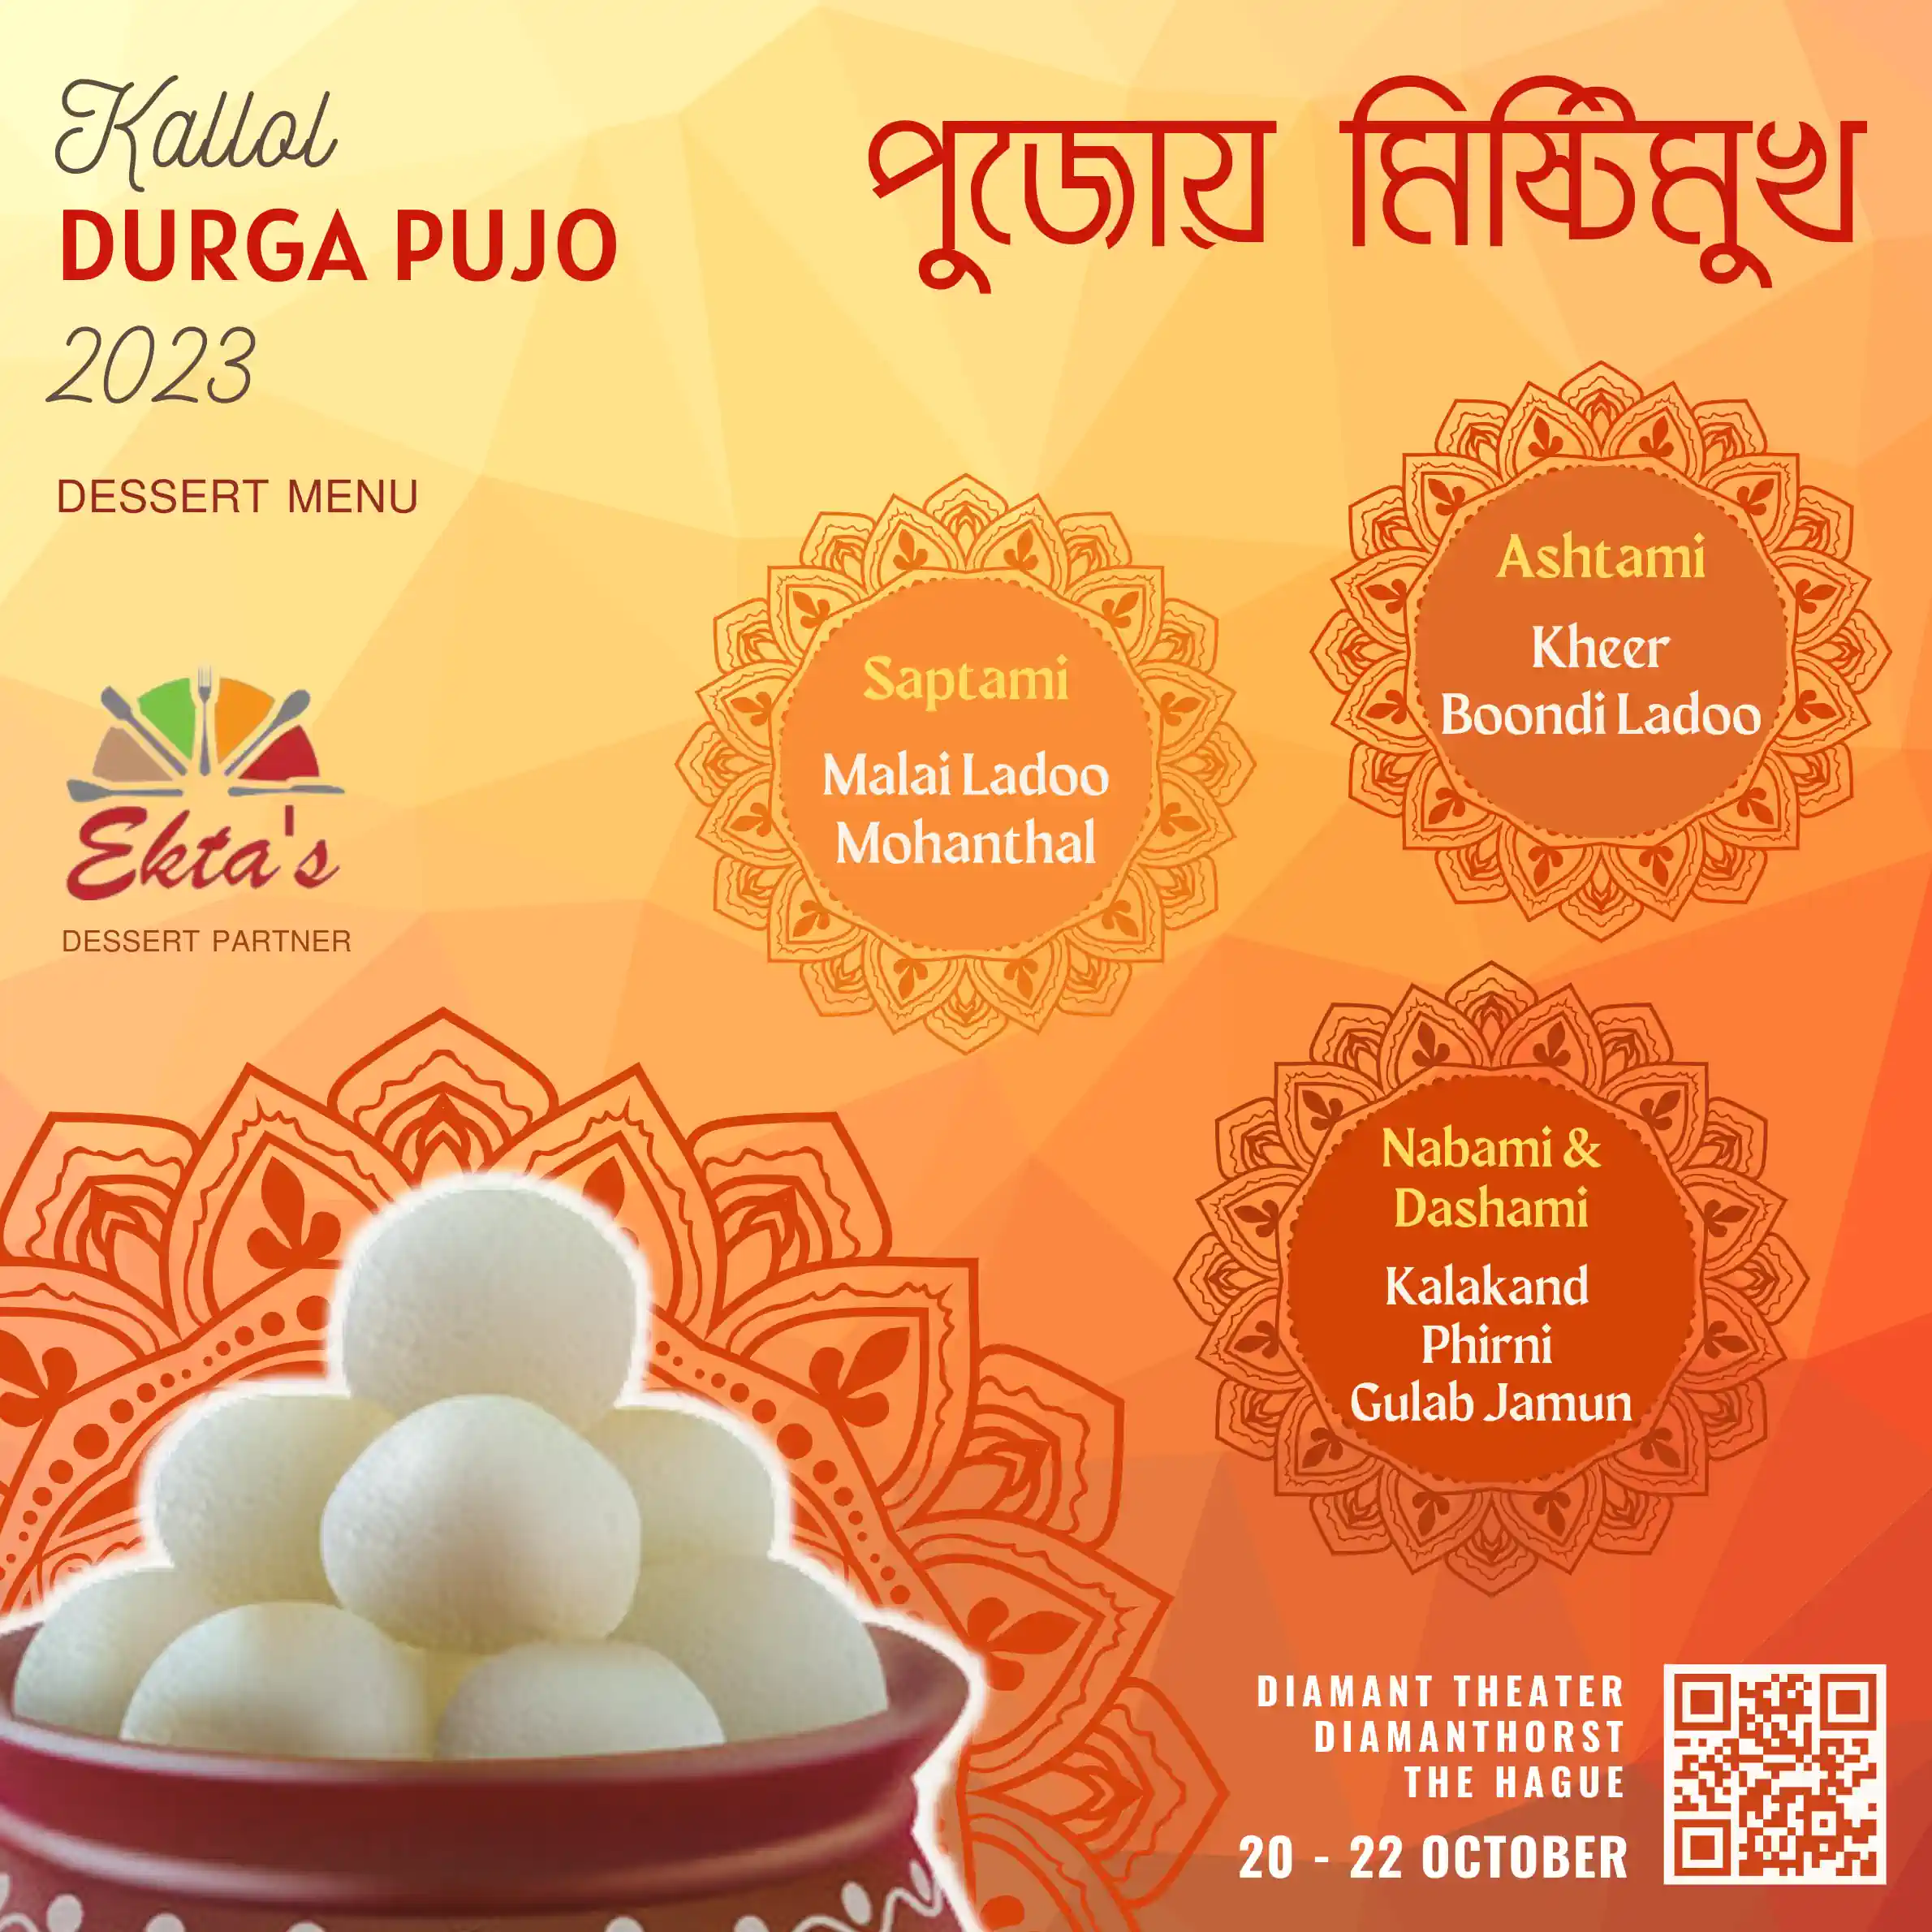 Kallol Durga Pujo 2023 Dessert Menu